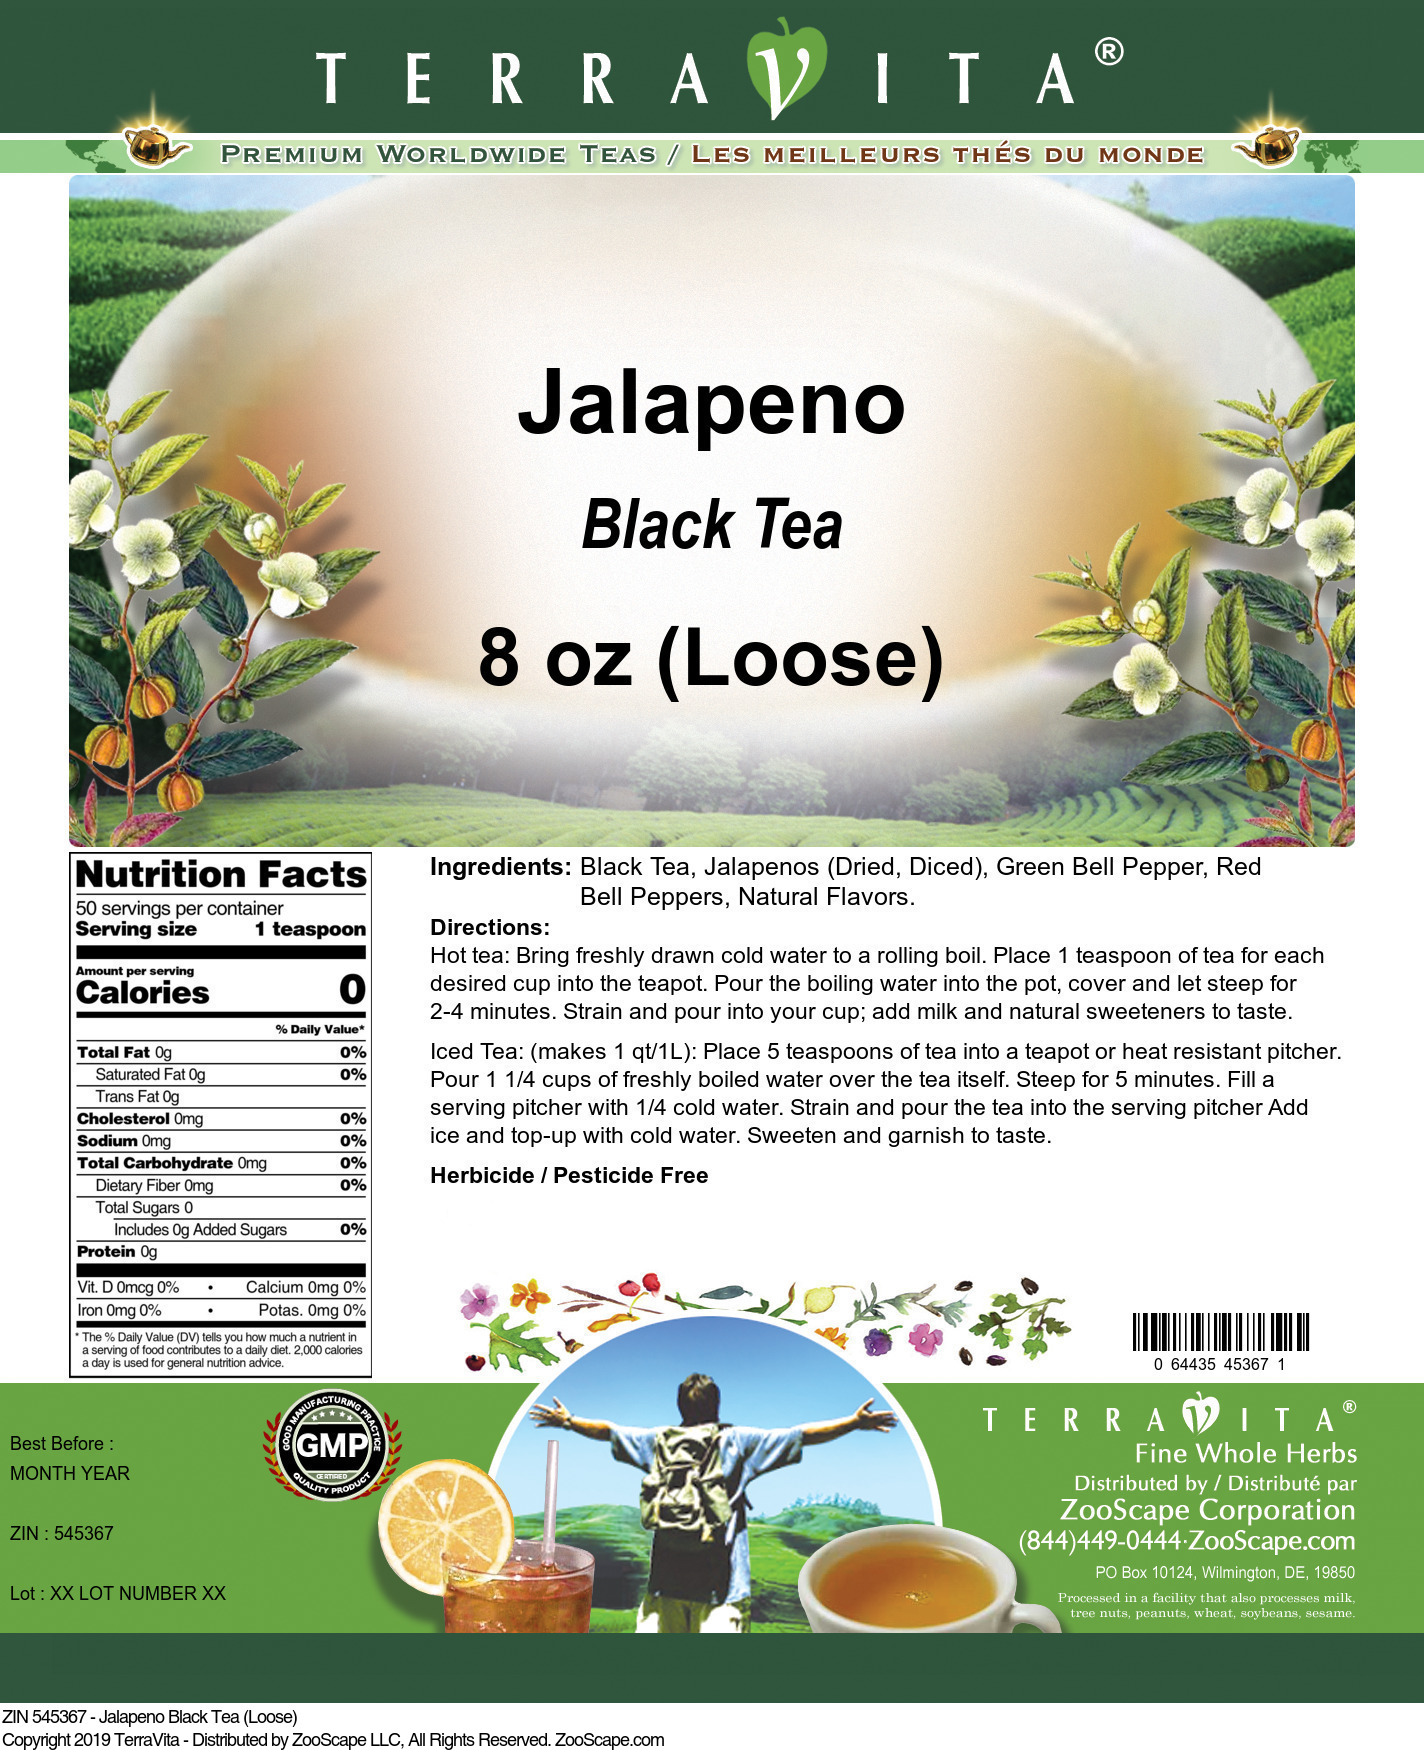 Jalapeno Black Tea (Loose) - Label